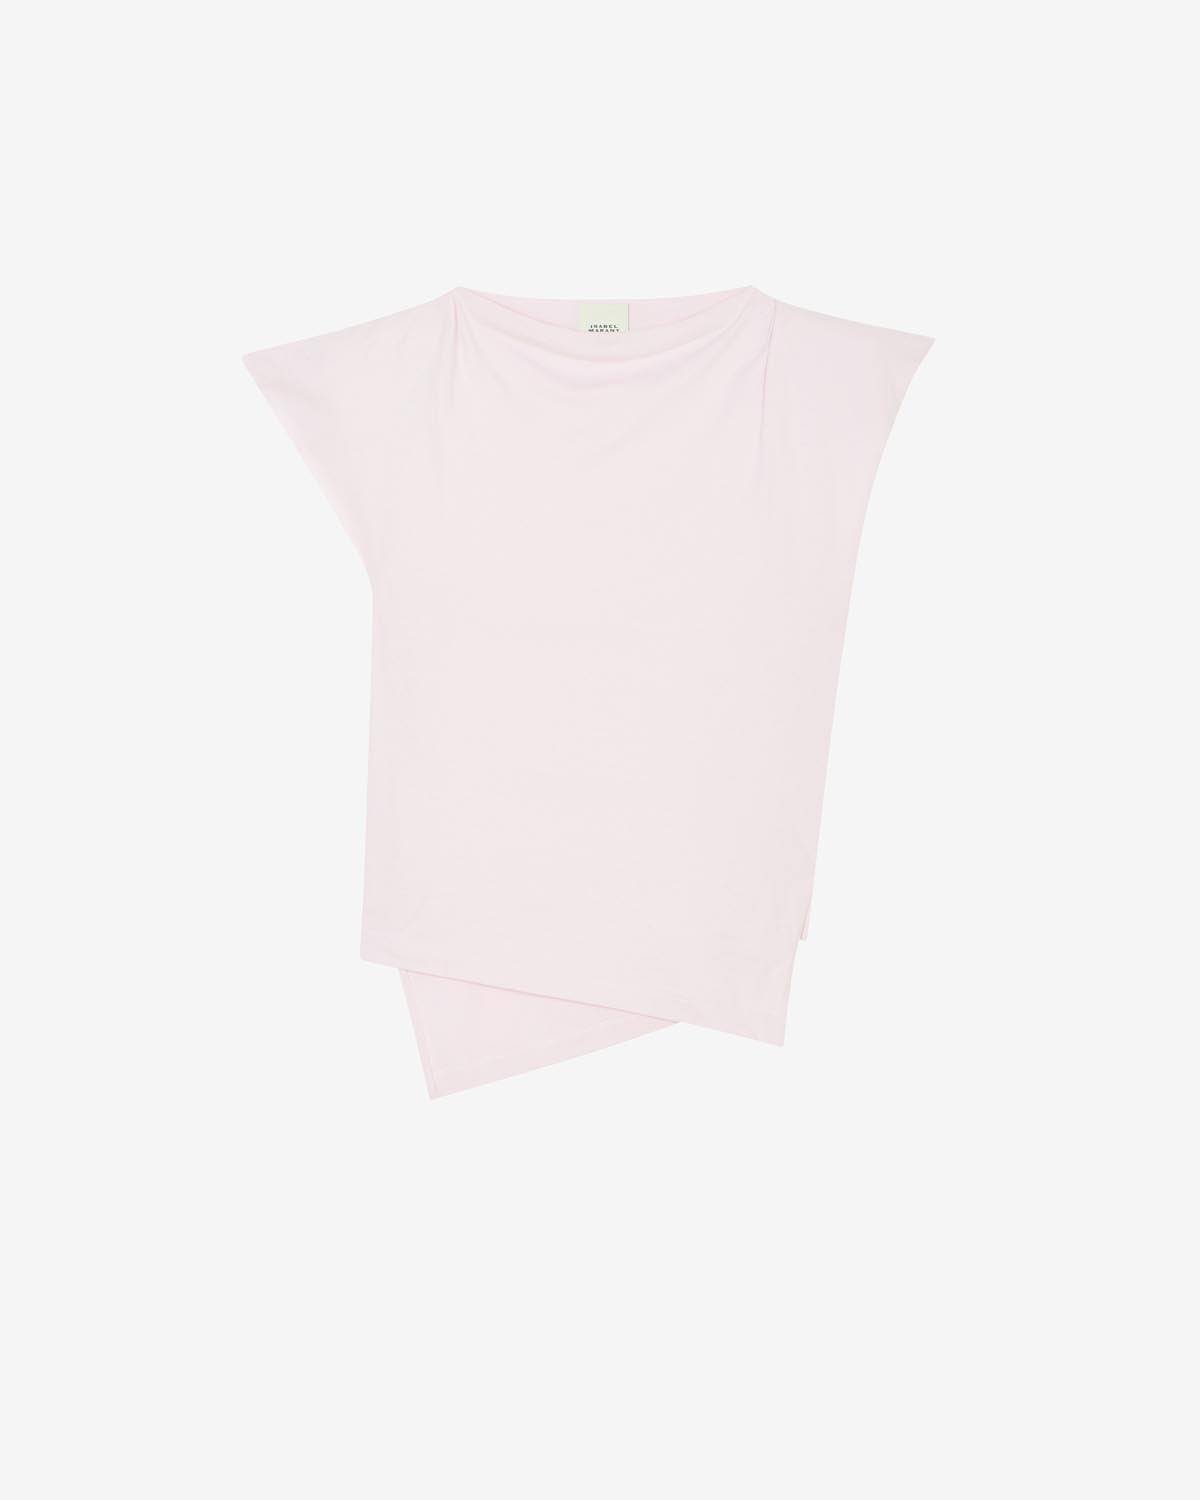 Sebani ティーシャツ Woman Light pink 1